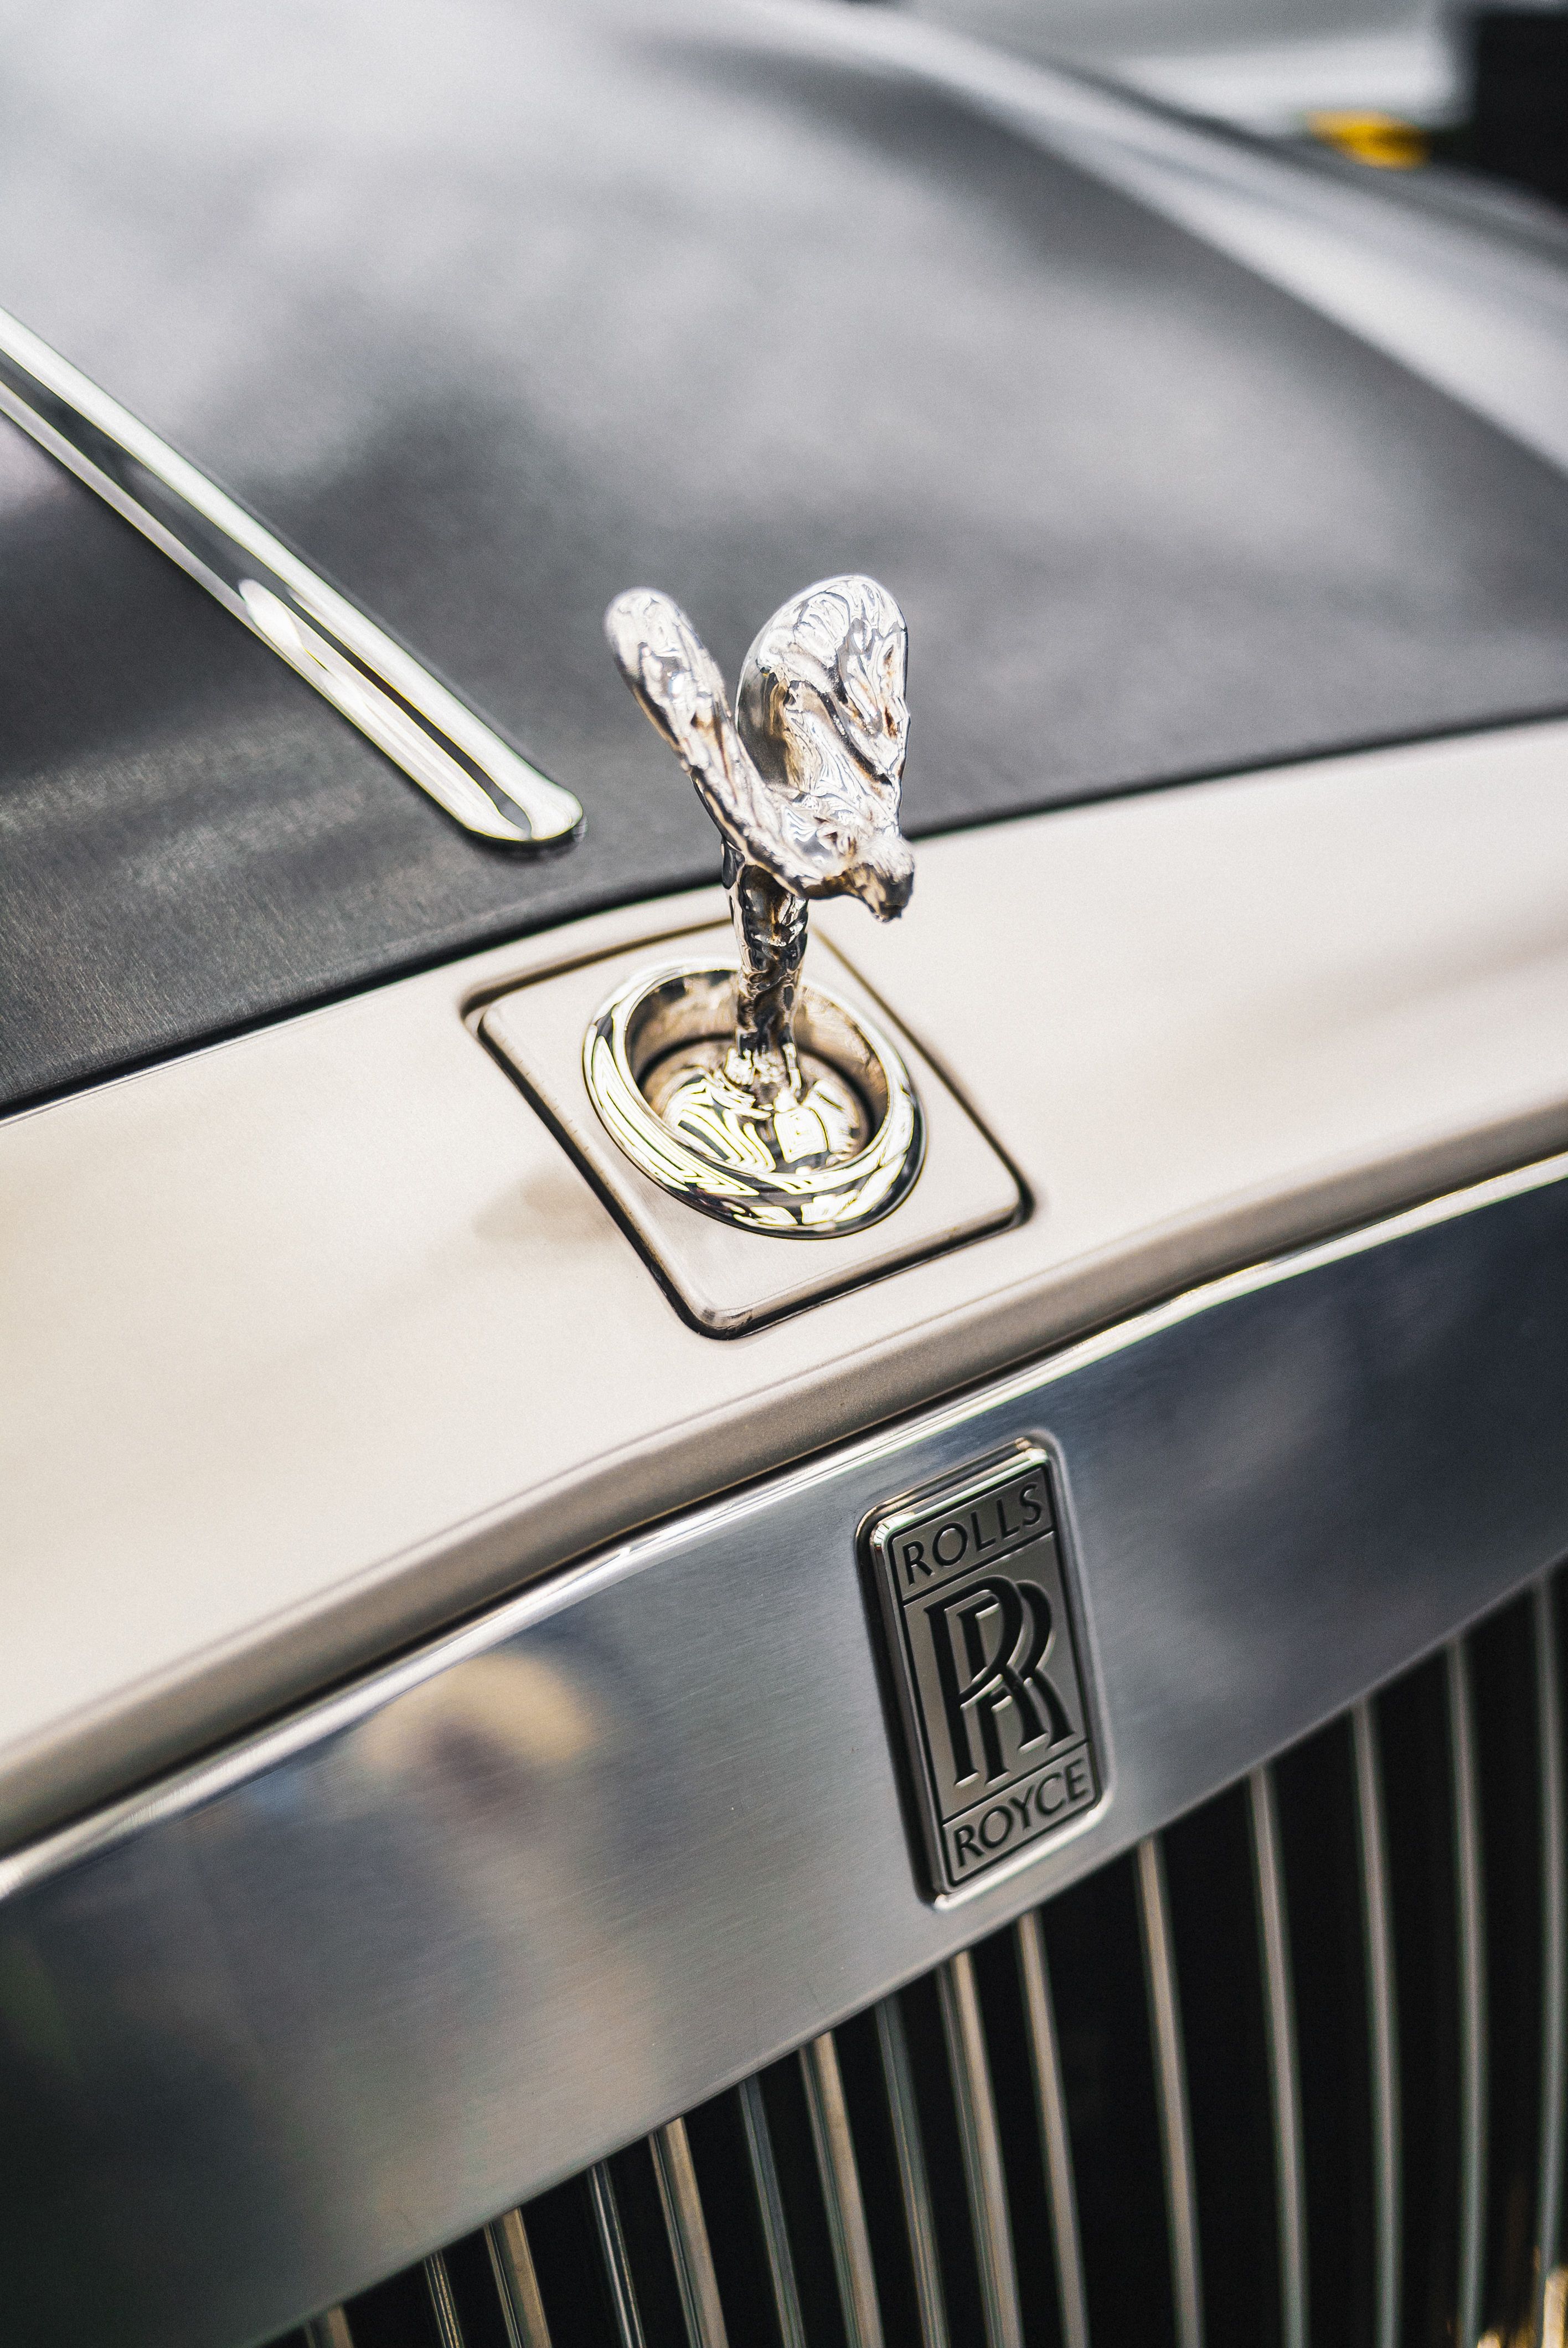 Close Up Photo Of Rolls Royce Car Emblem · Free